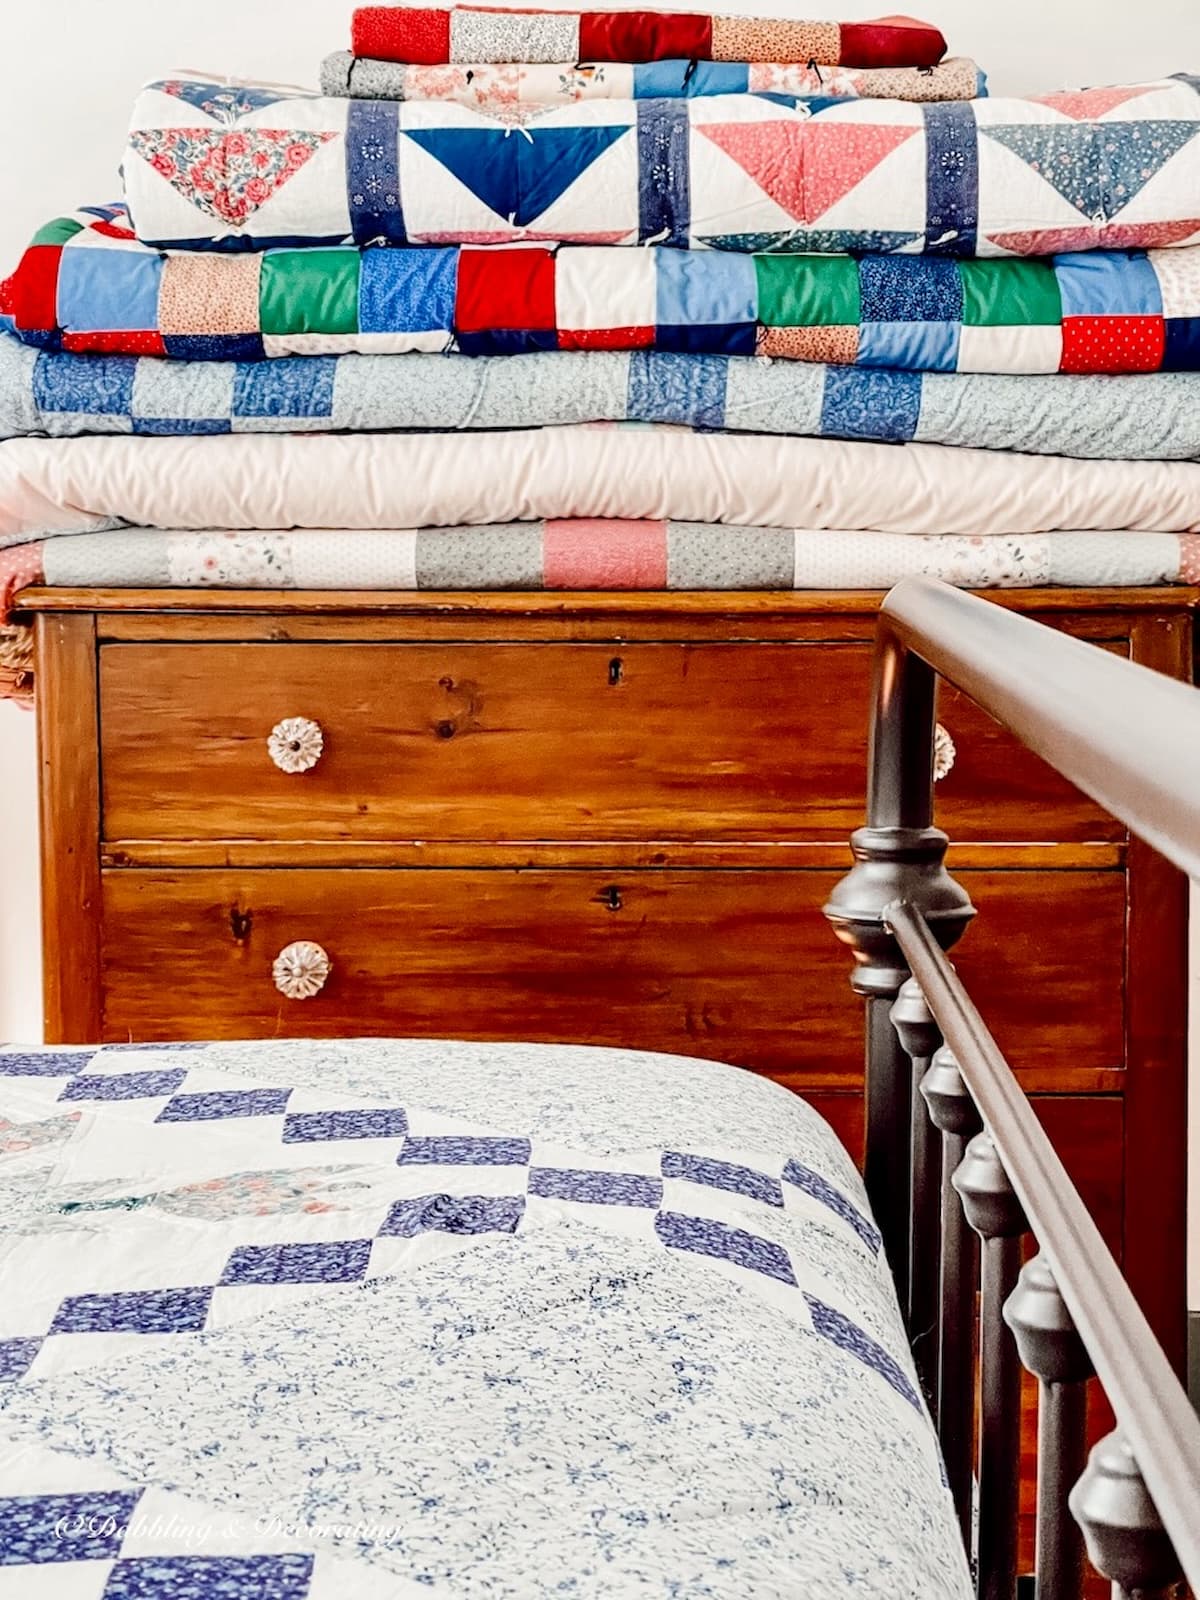 Display of folded vintage quilts on bedroom dresser. Vintage aesthetic bedroom.